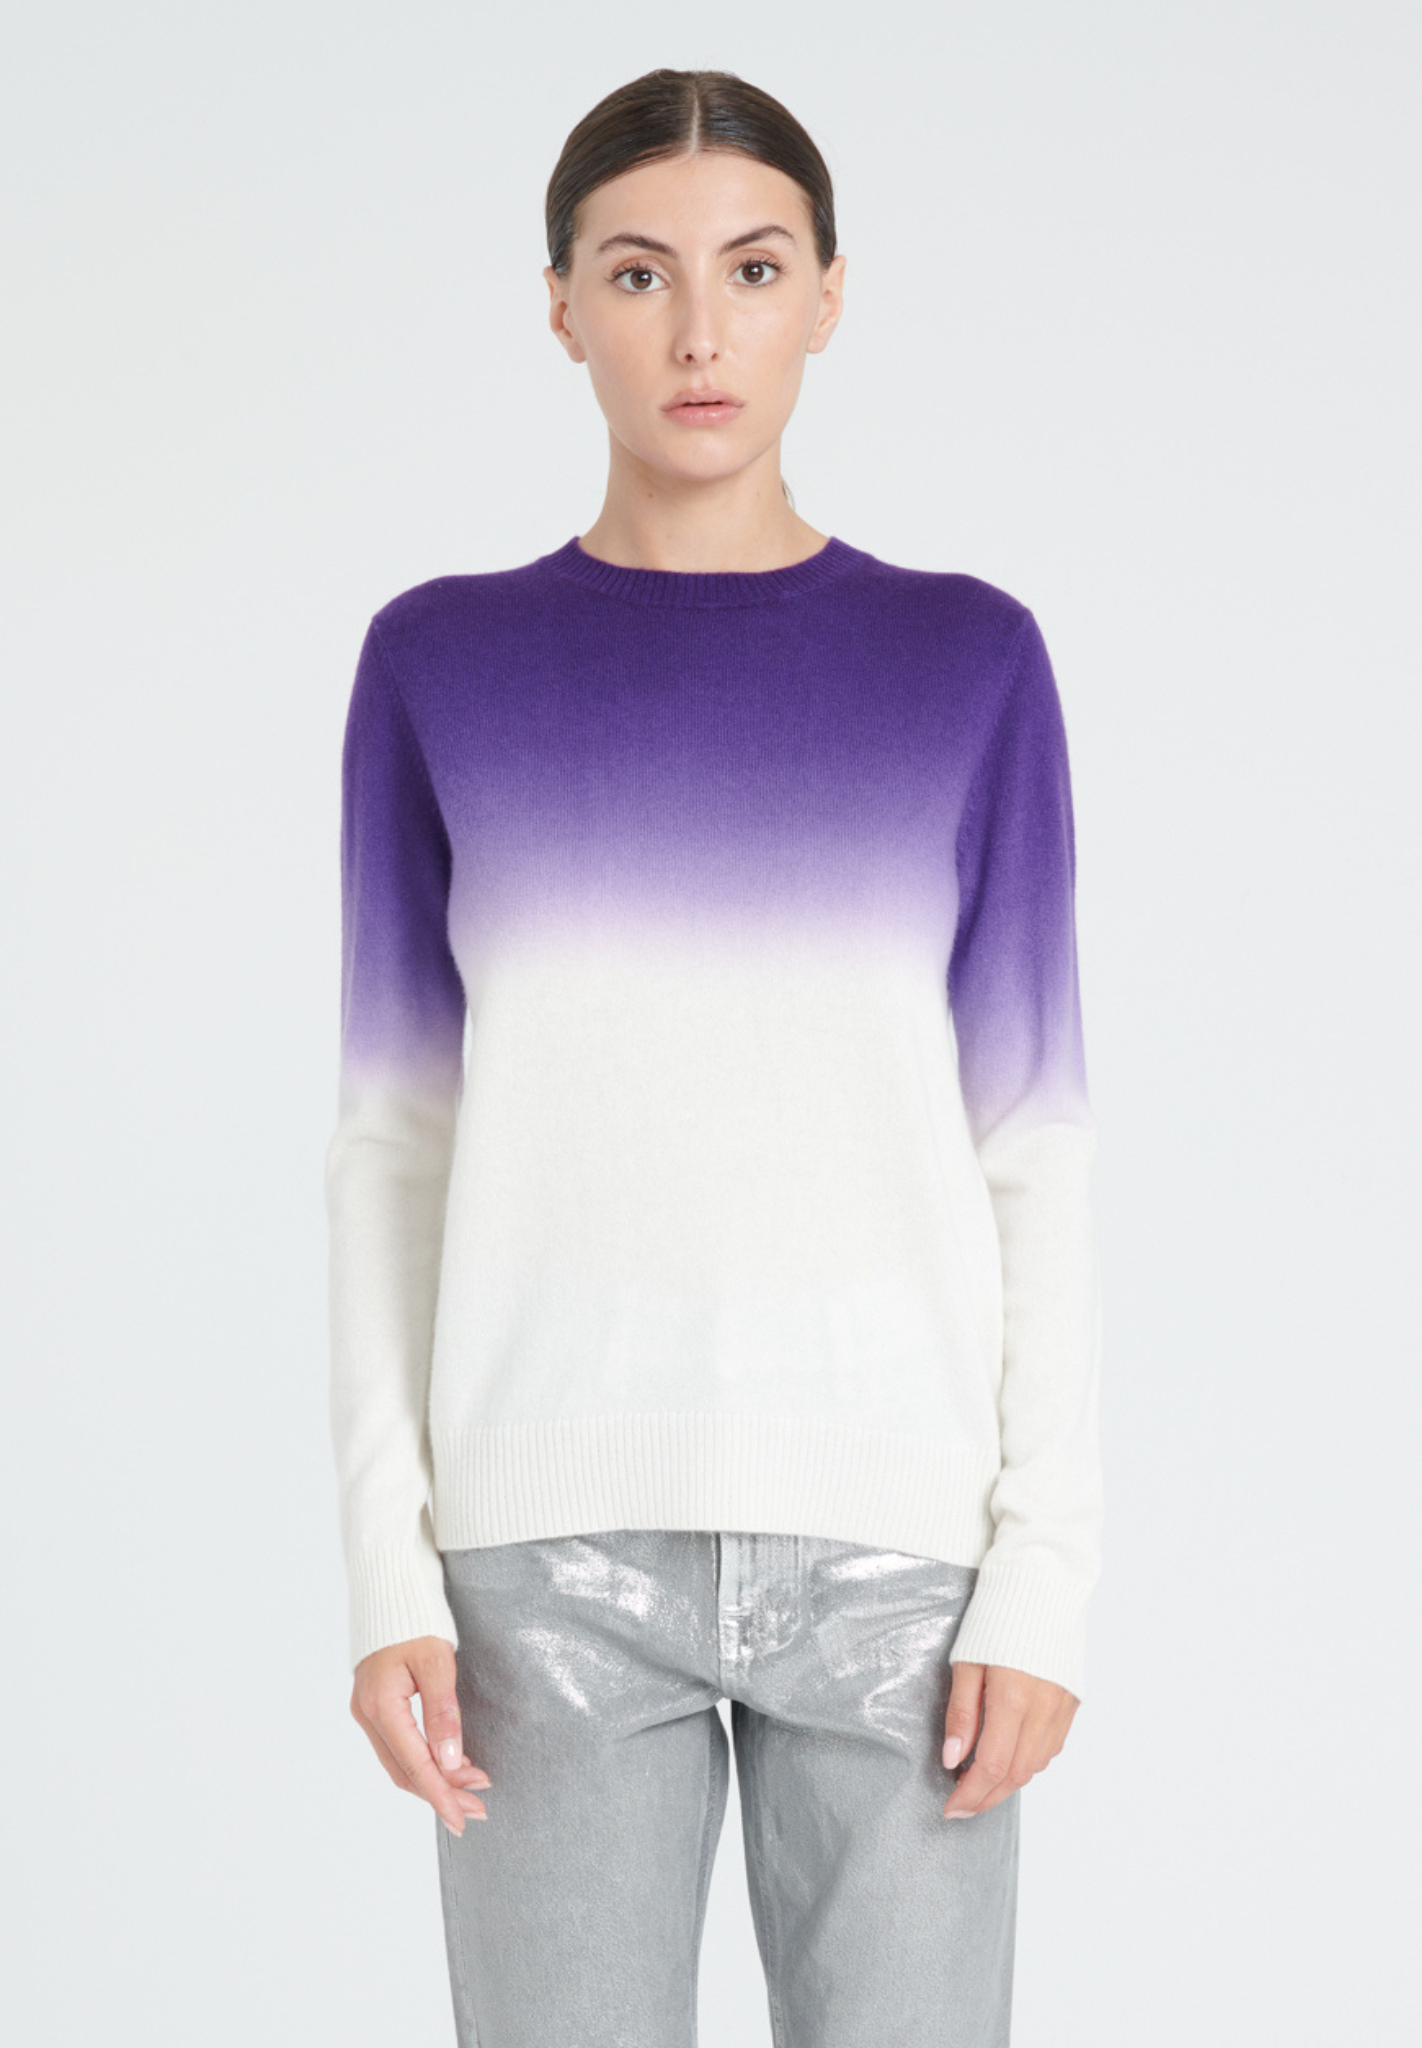 ZAYA 9 Round neck tye &amp; dye sweater in ecru and dark purple cashmere